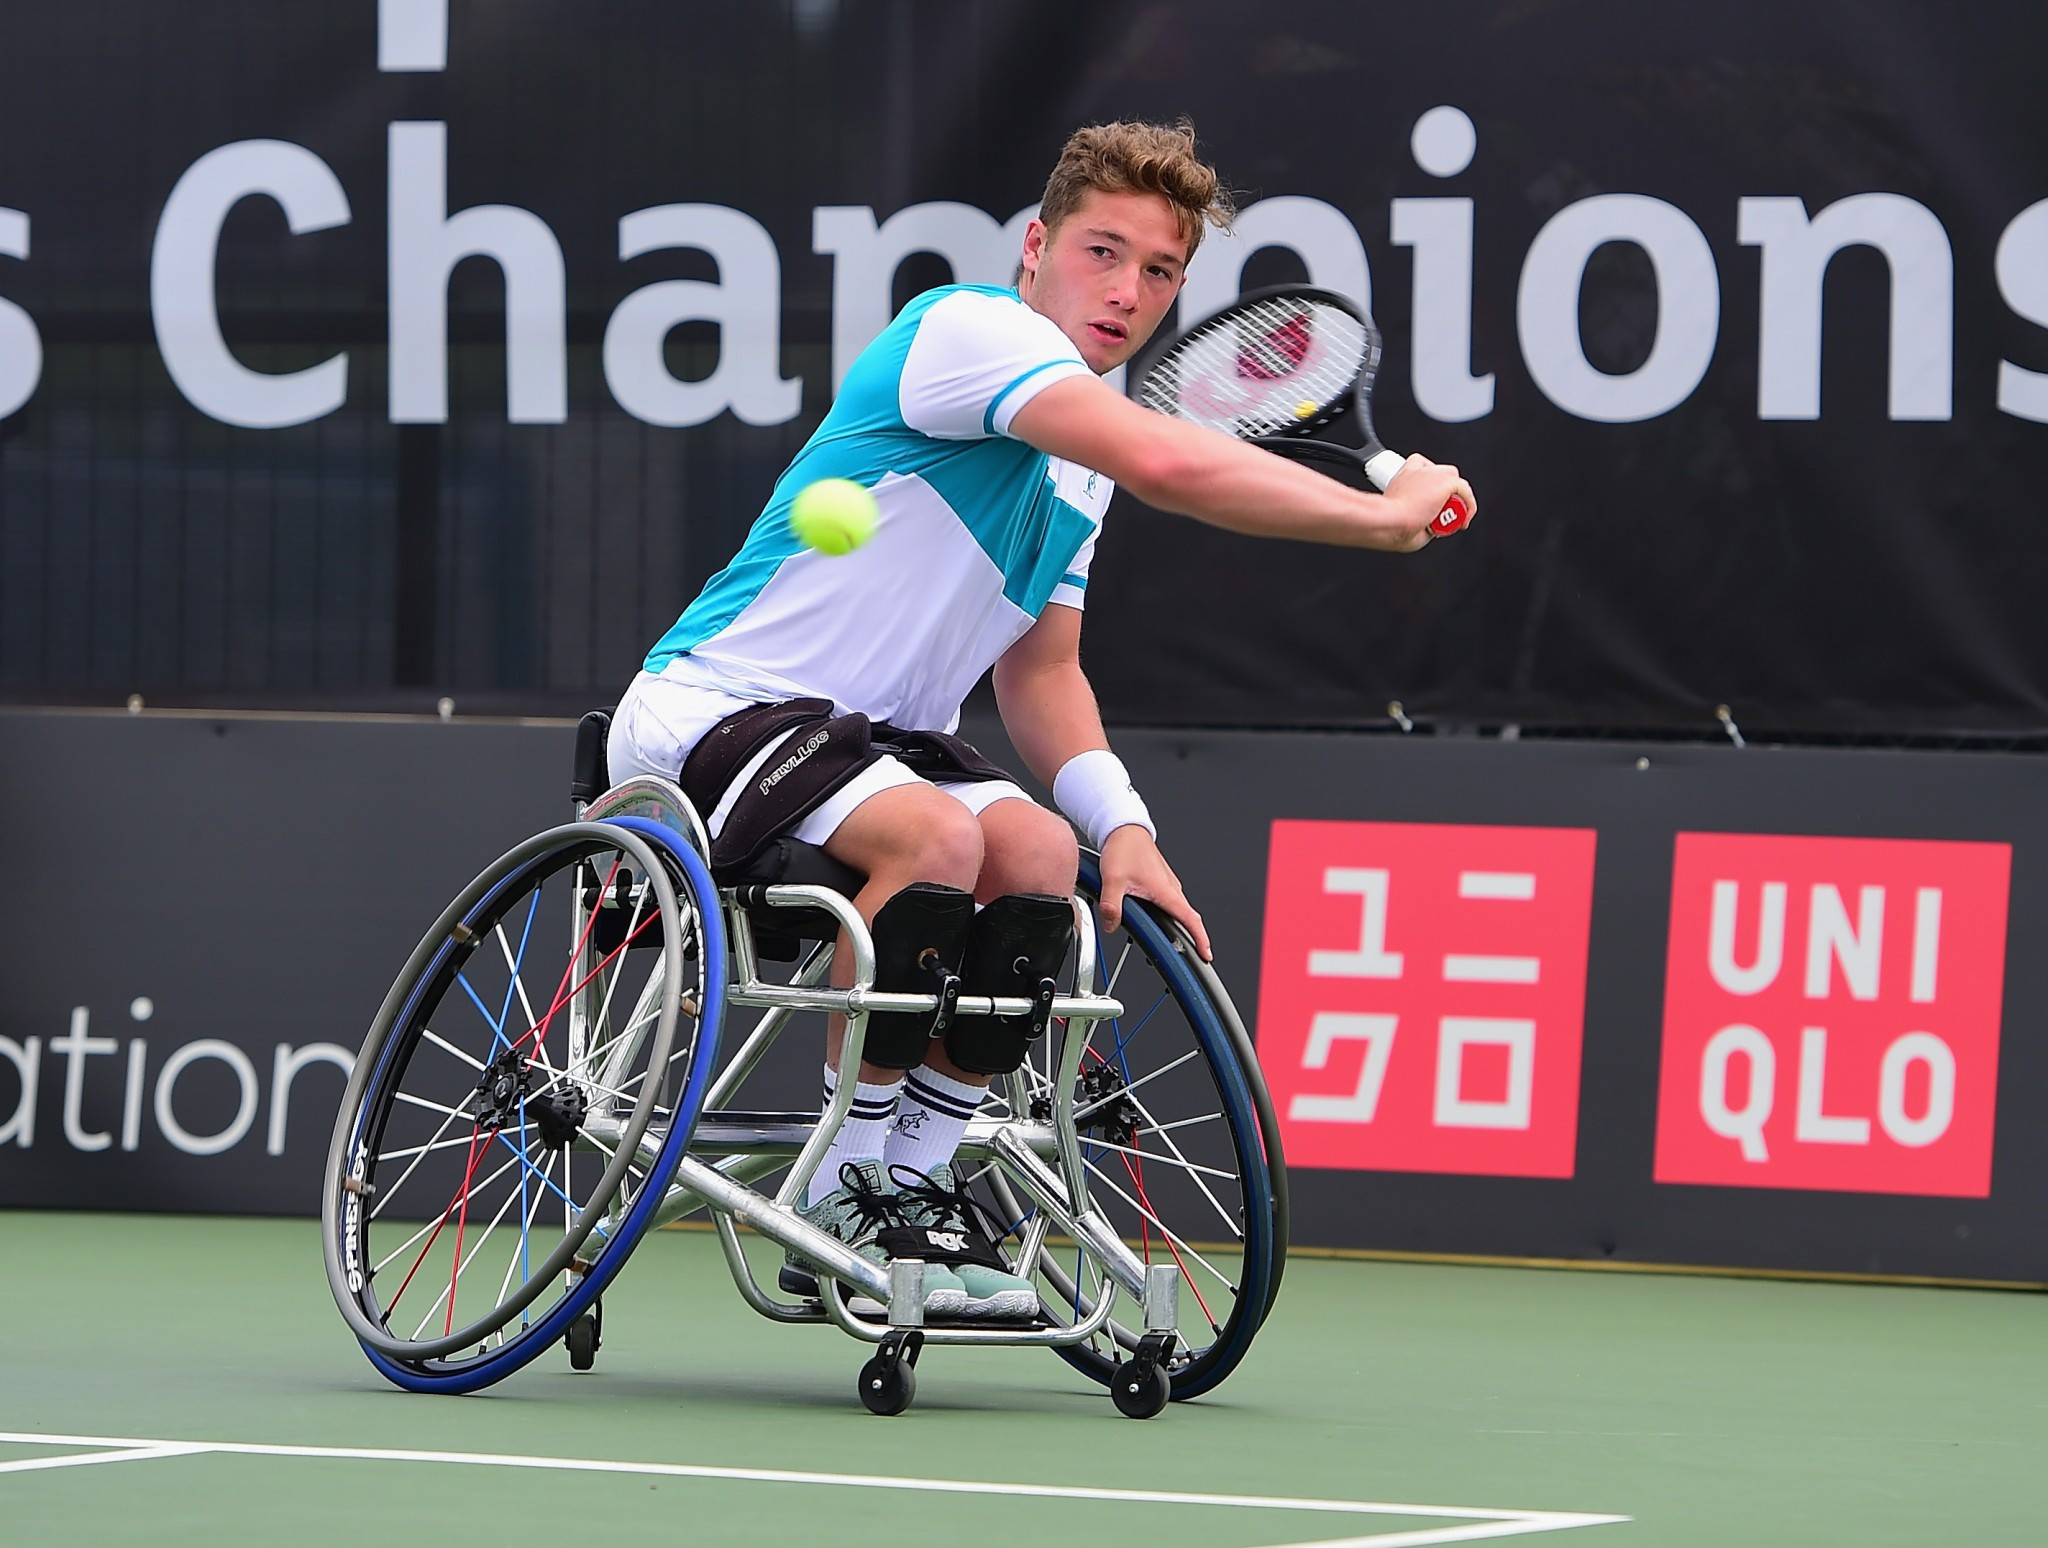 Hewett defeats Reid in British Open Wheelchair Tennis Championships semi-final